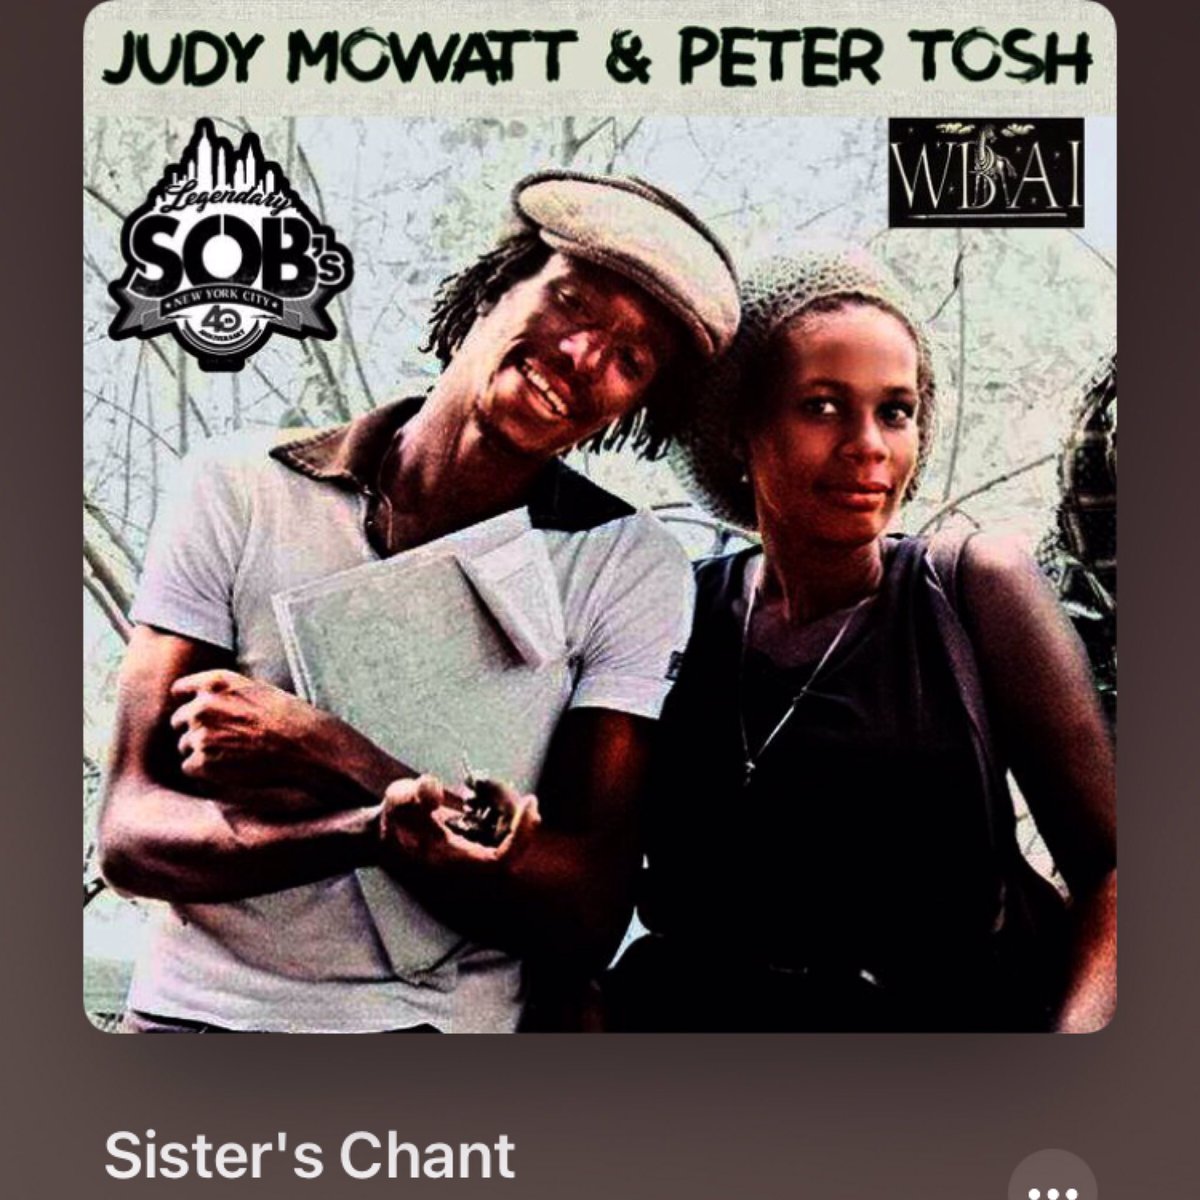 #Nowplaying 
Sister's Chant - Judy Mowatt with the One Vibe Band (SOBs (Sounds Of Brazil), New York City, November 1983 WBAI) 
#JudyMowatt #reggae #レガエ #bootleg #80s #SOBs #1983 #WBAI 
youtube.com/results?q=Sist…